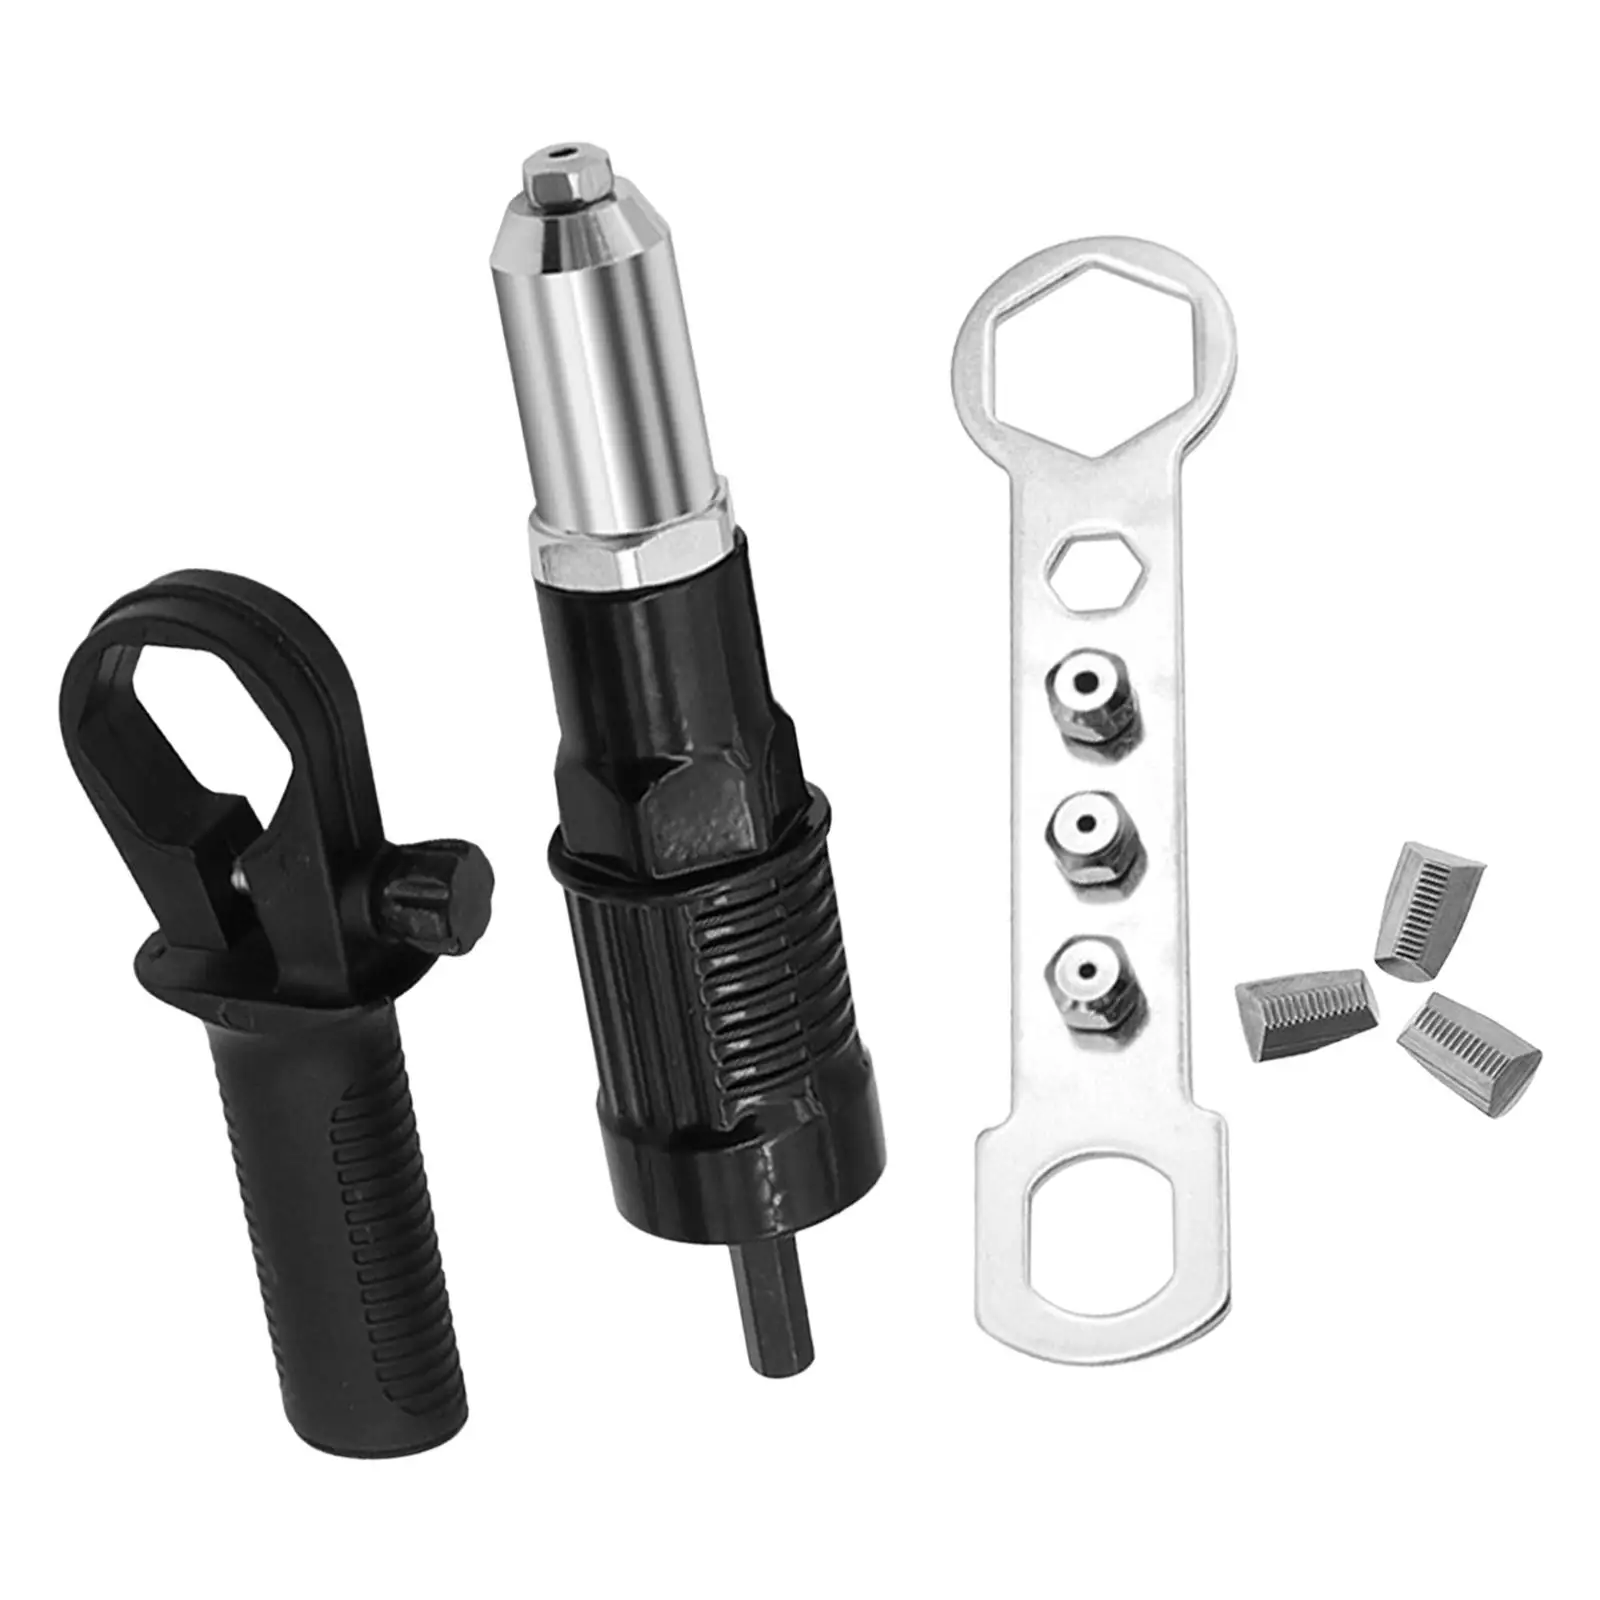 Riveting Adapter Attachments Pulling Rivet Machine Joint Cordless Drill Rivet Adapter Riveter Insert Nut Tools Rivet Connector